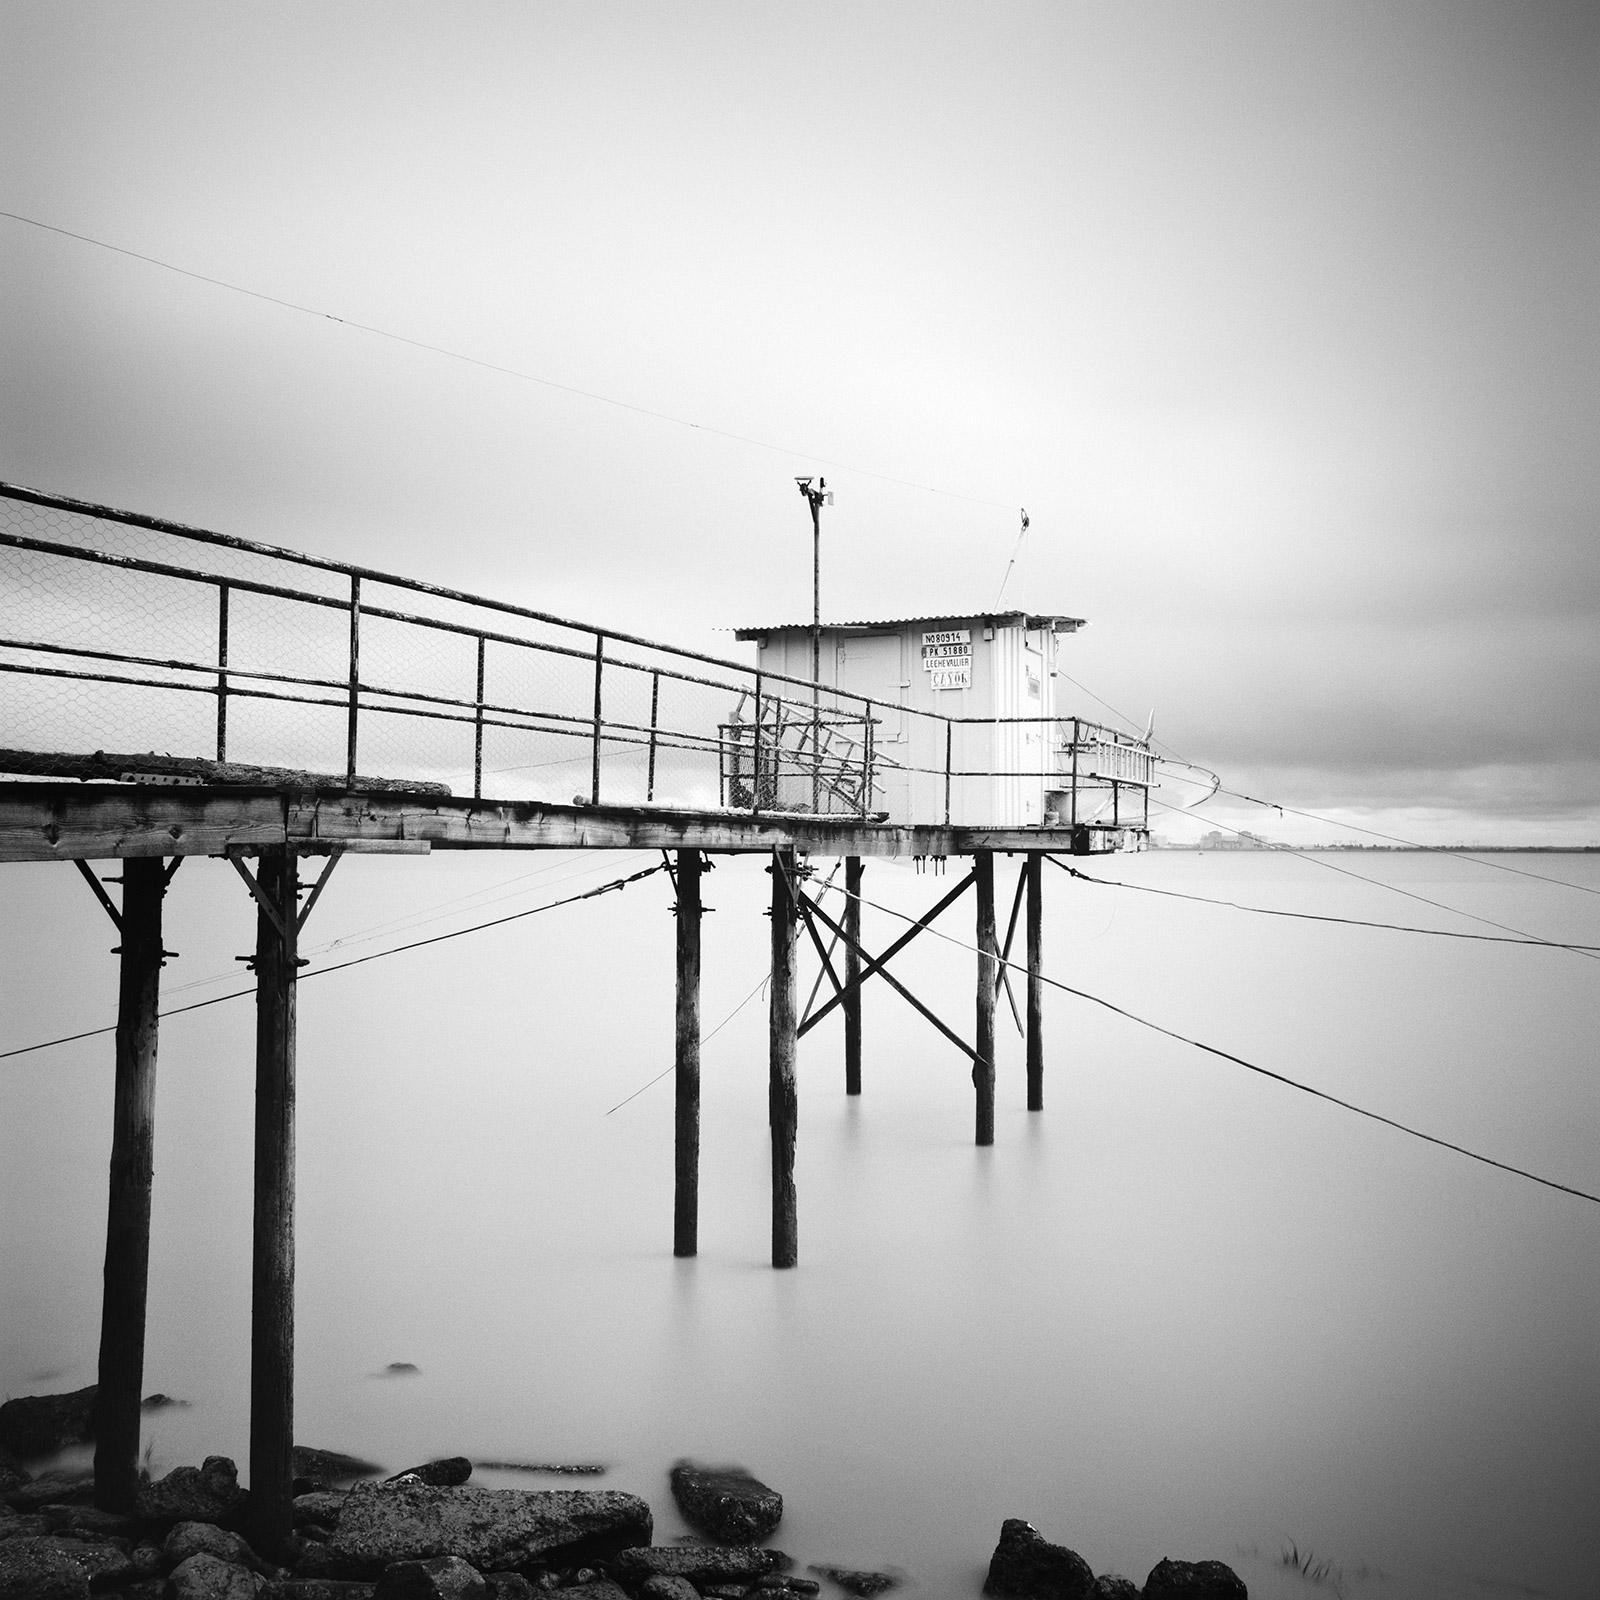 Stilt House, fishermans hut, France, black and white art photography, landscape